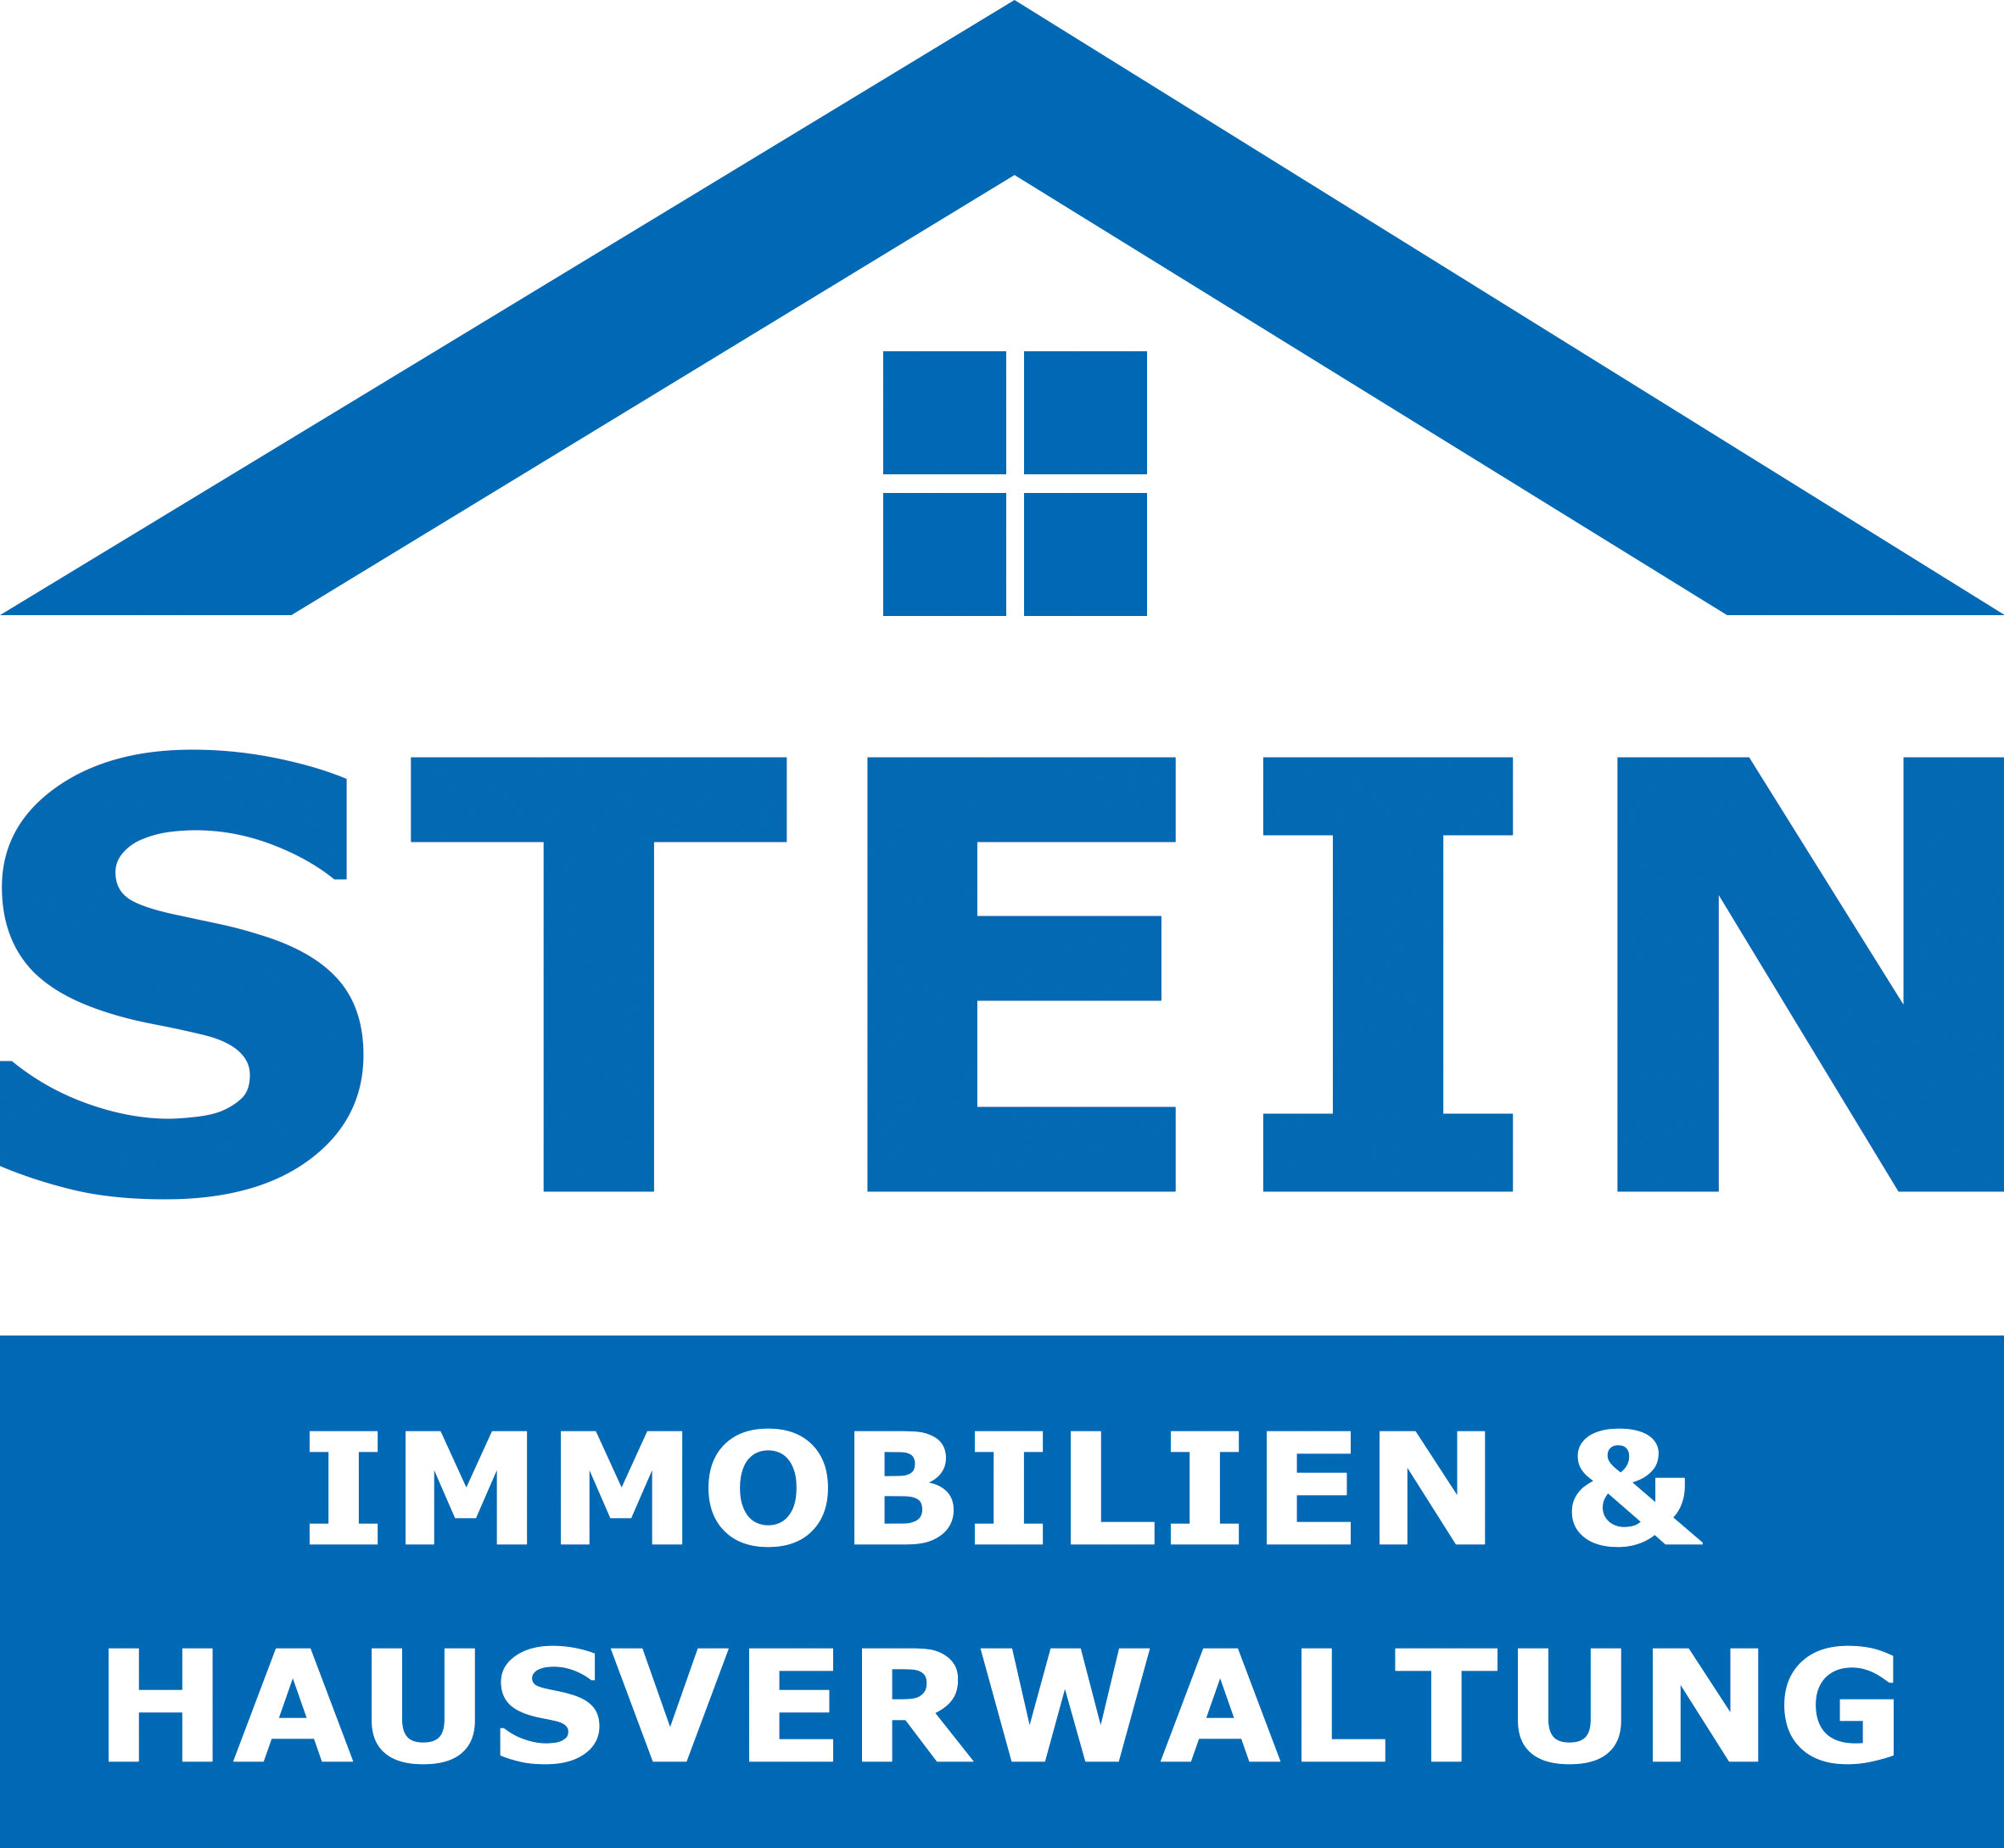 Immobilien Gasper & Stein GmbH